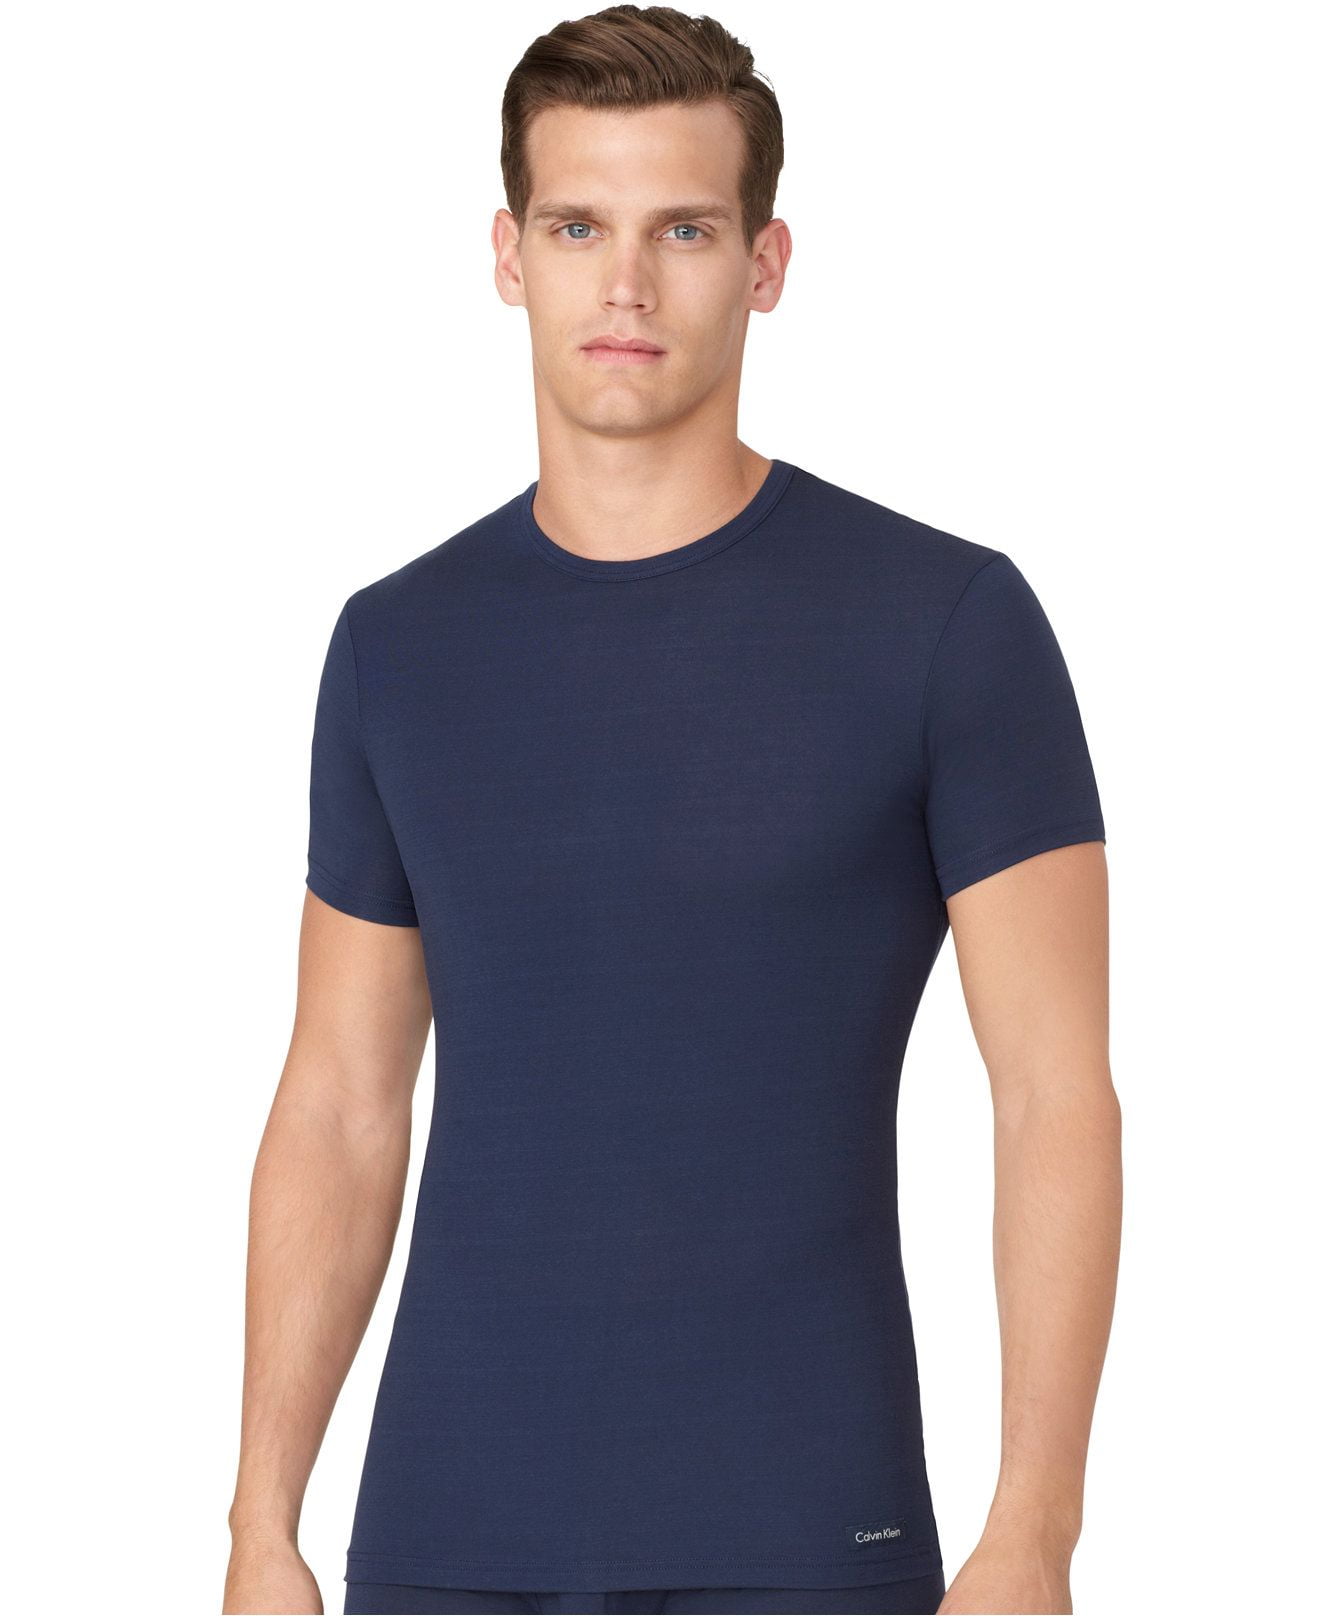 Calvin Klein MicroModal Undershirts 50% Off At Macys | Undershirt Guy Blog